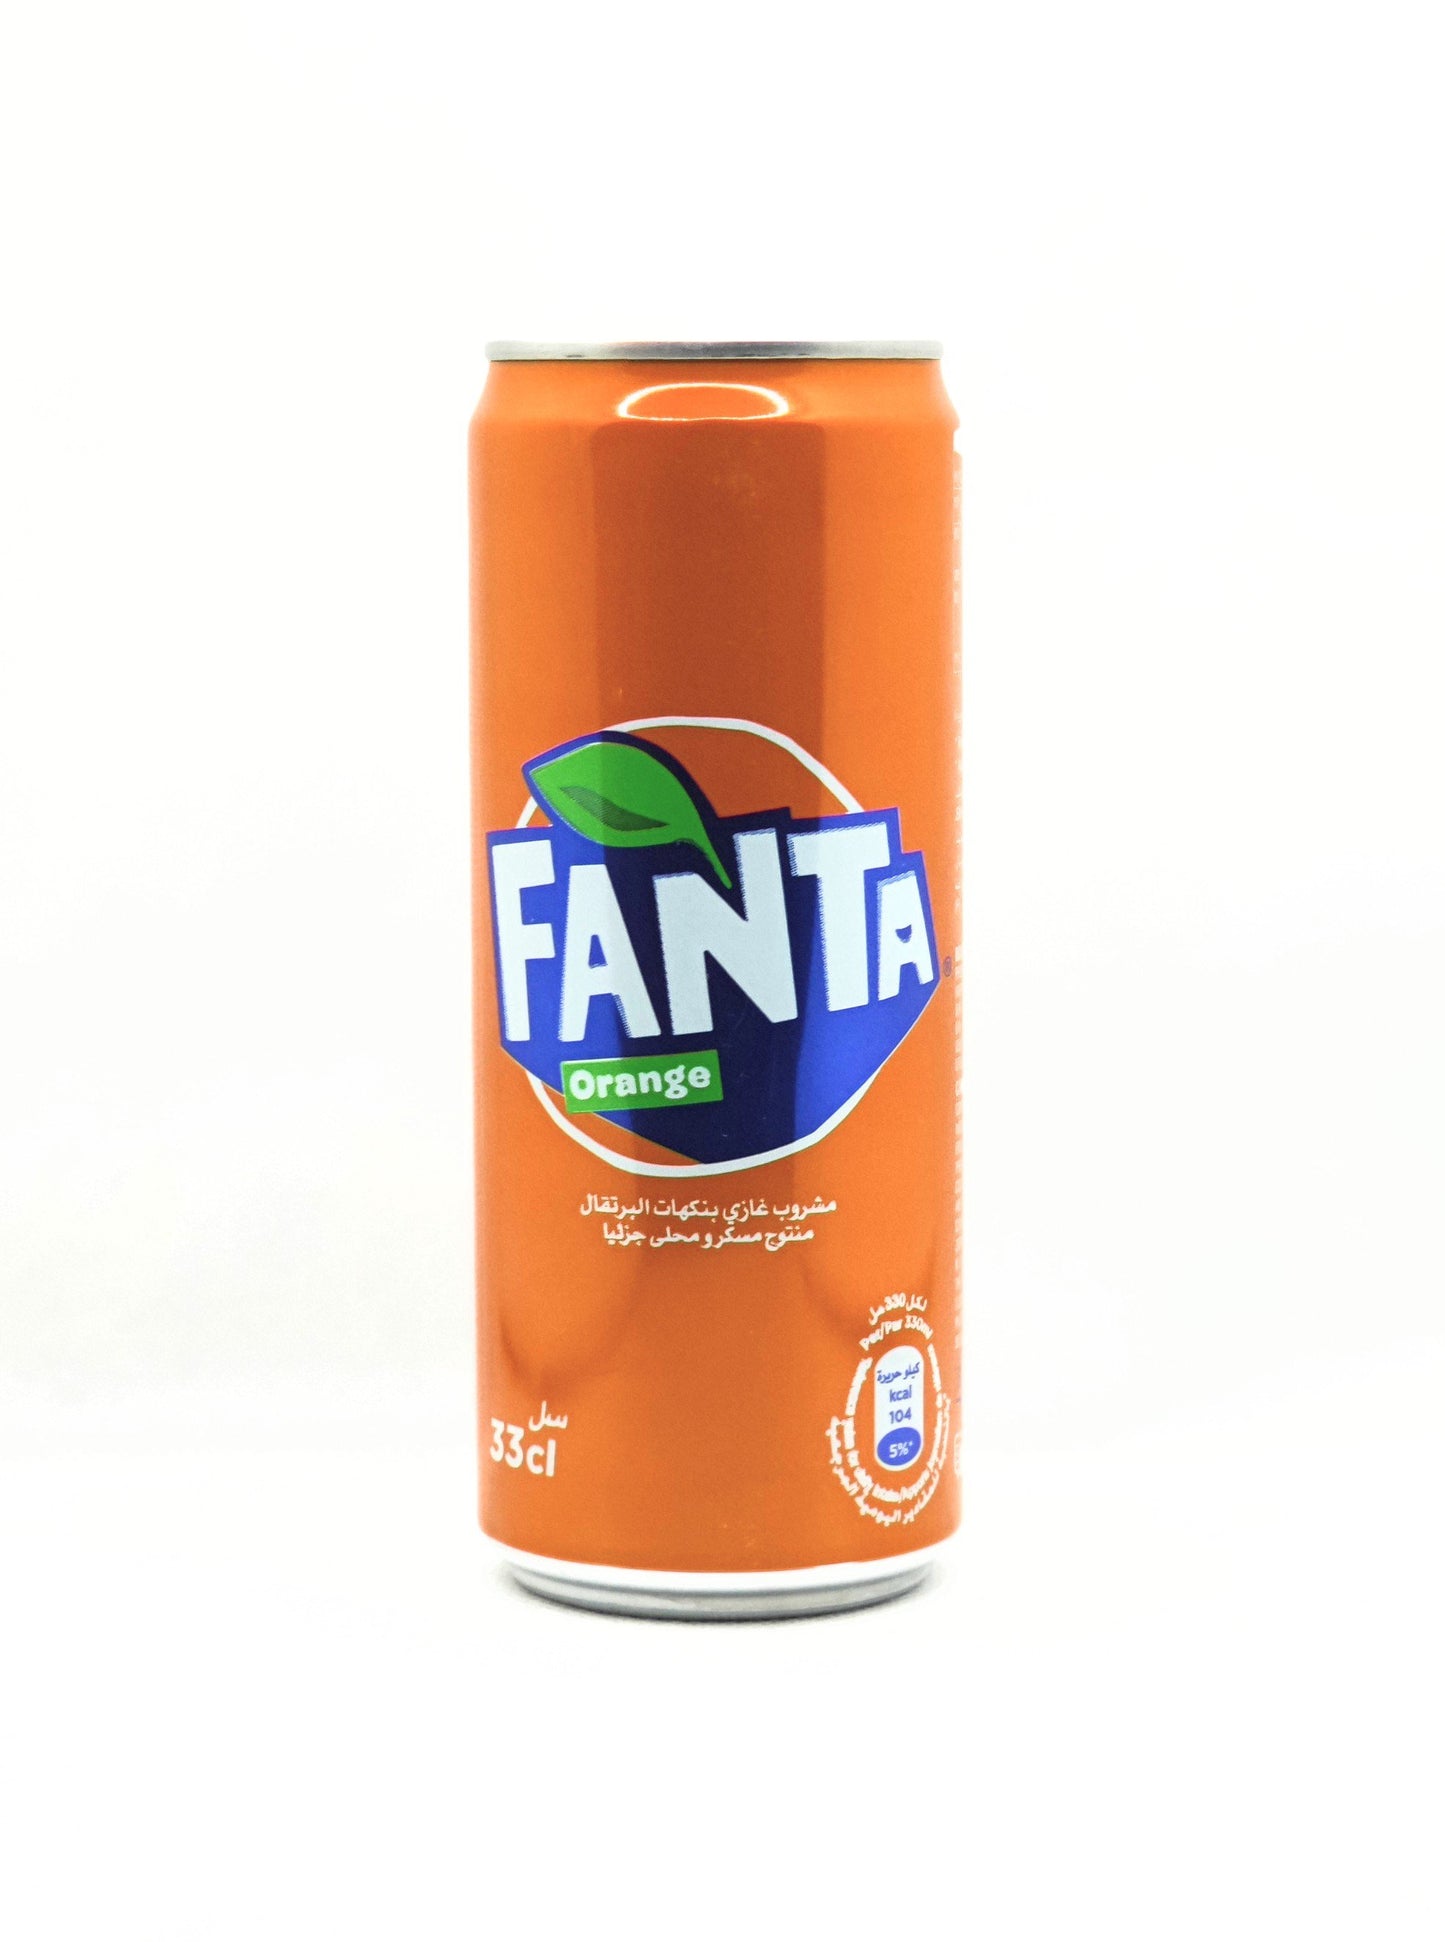 33 centilitre can of fanta